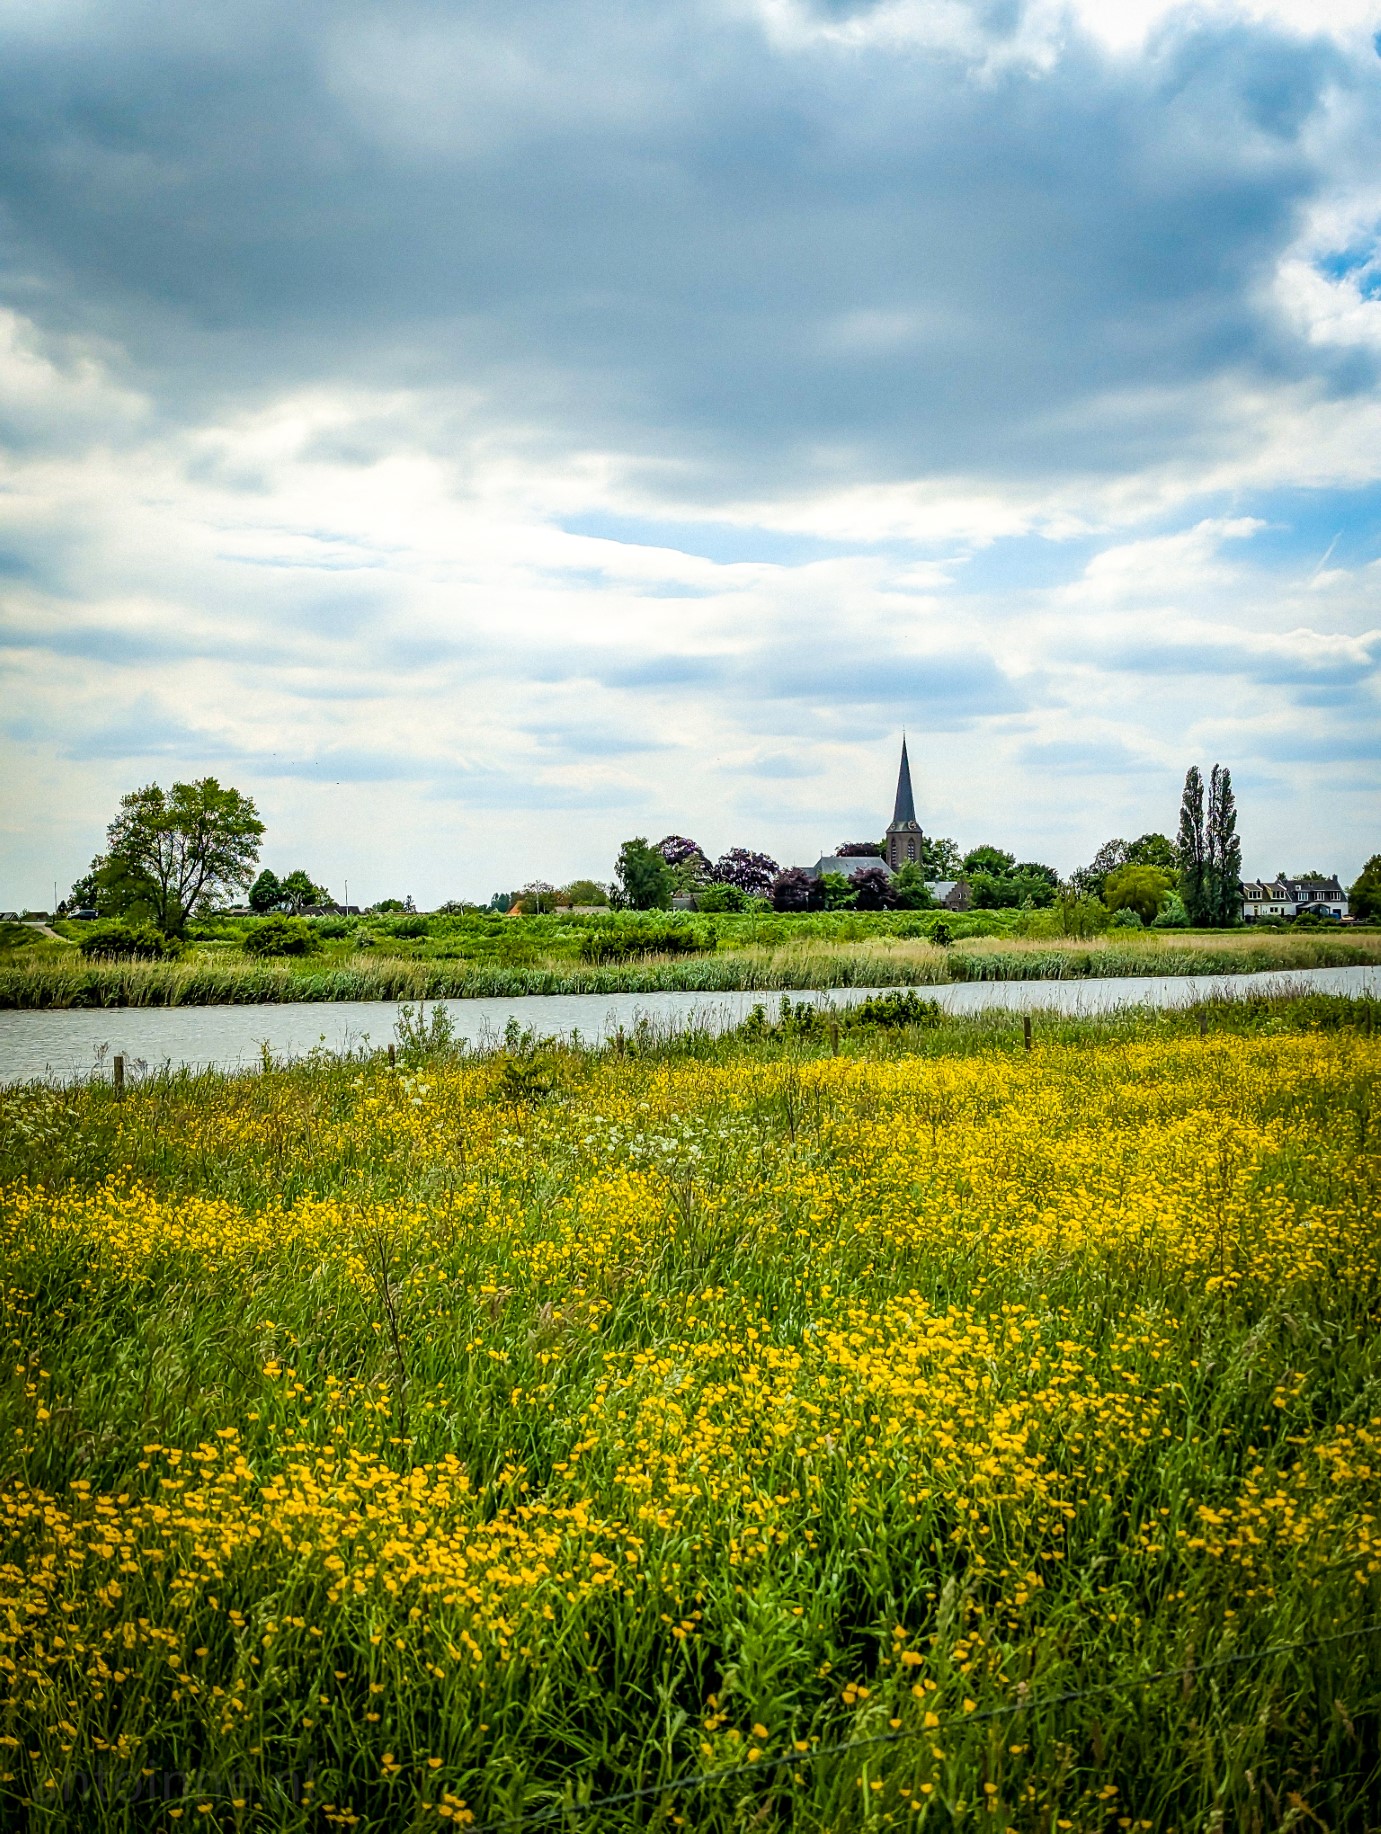 Everdinger Waarden. You walk along the river Lek.  Beautiful flower meadows surround you as you look towards the small town of Everdingen.